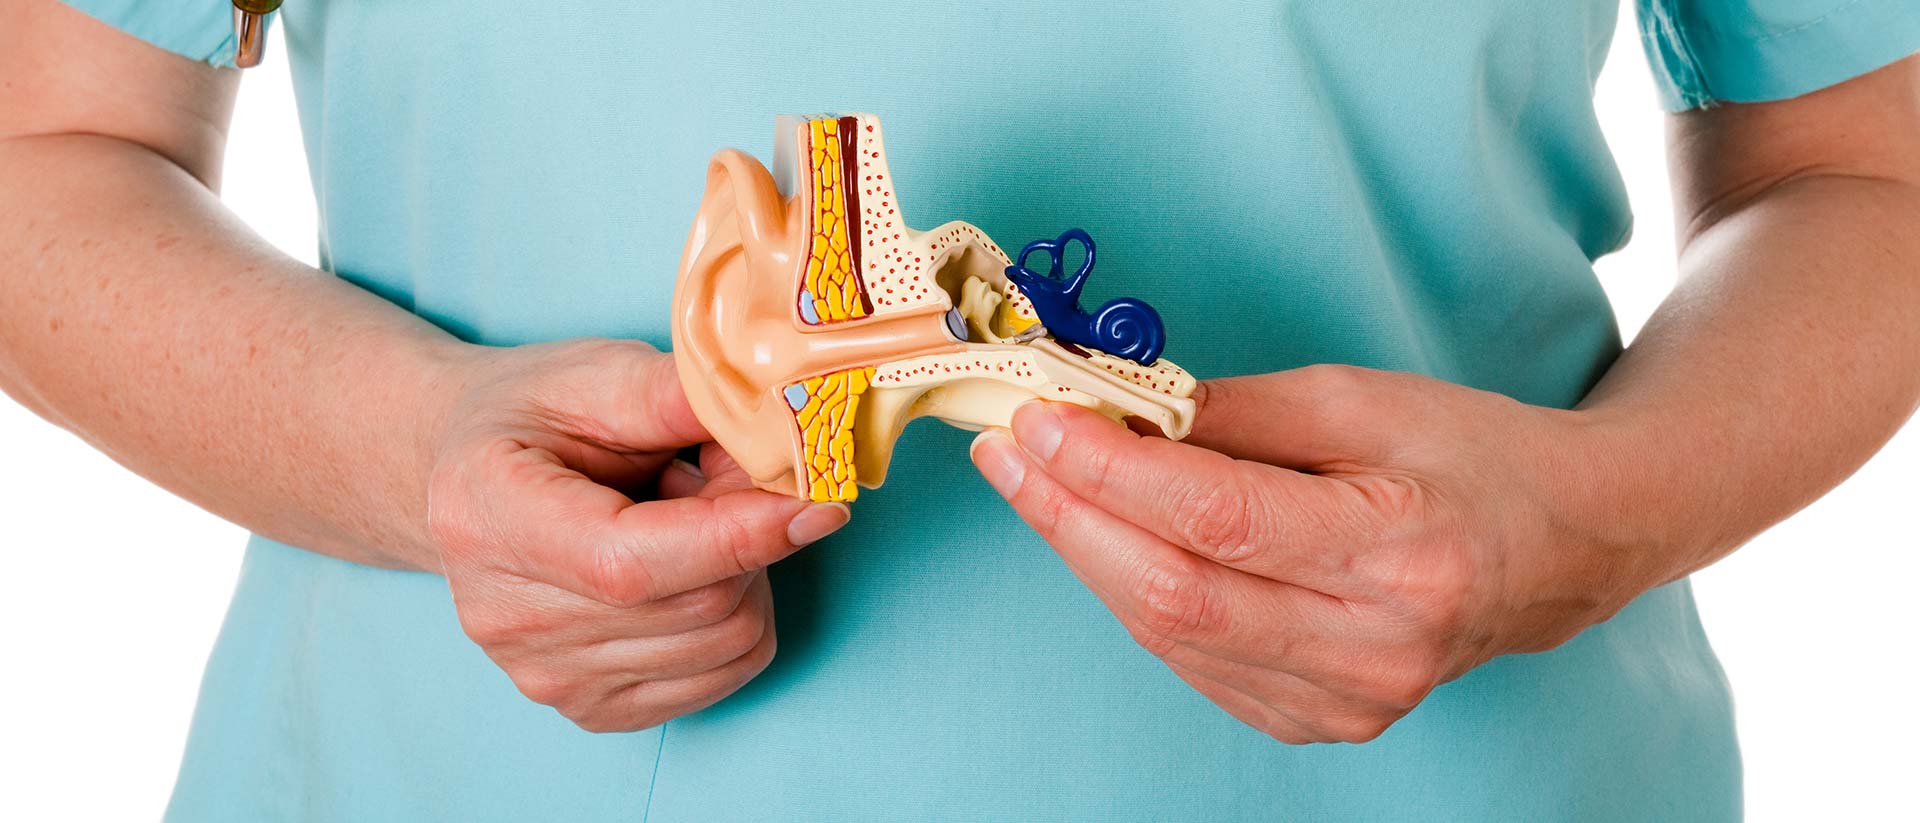 Vestibular neuritis: "Sudden Hearing loss of the balance system"